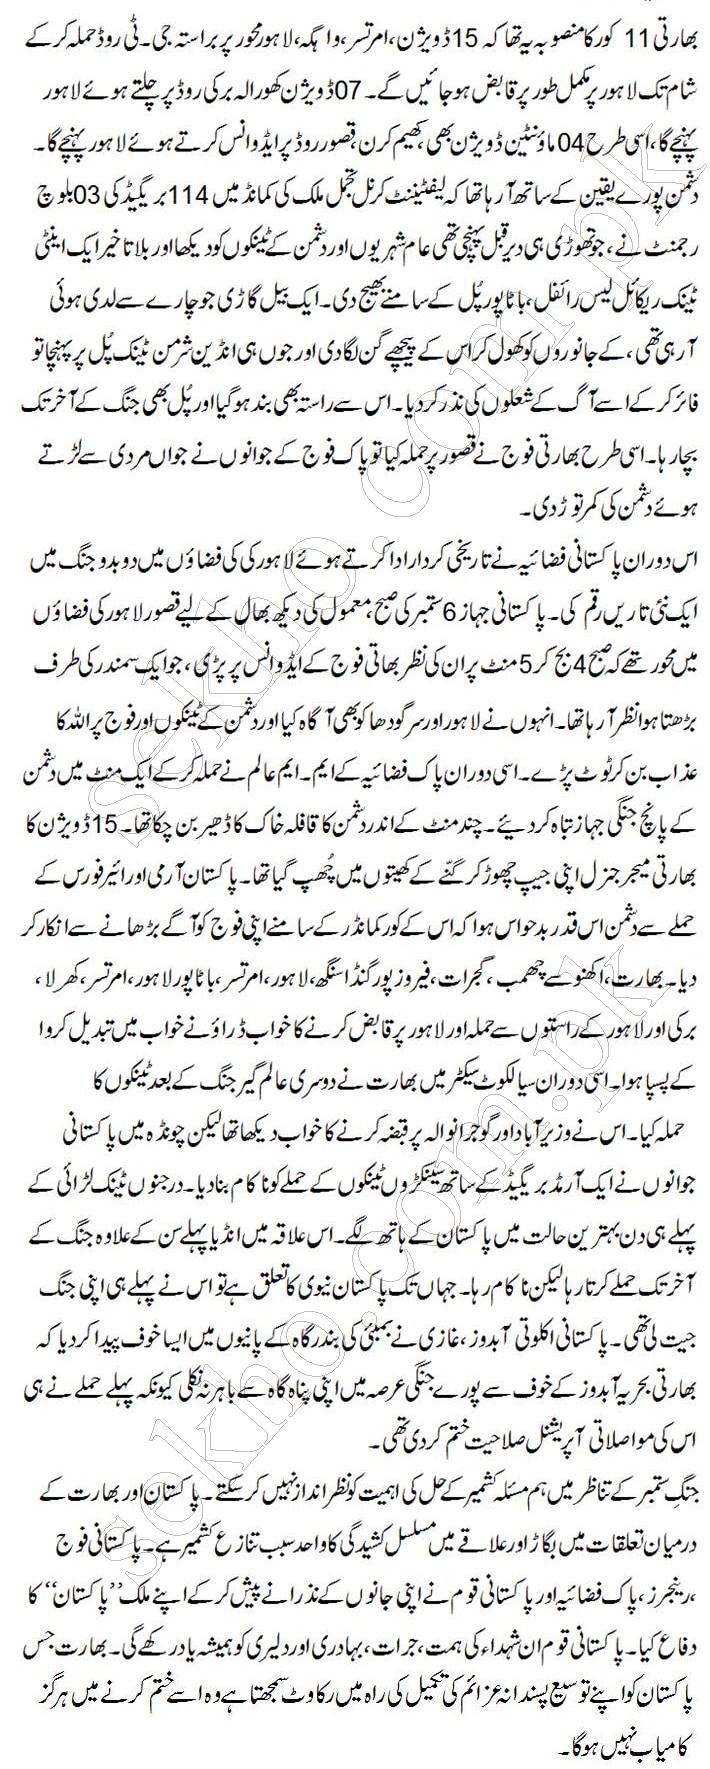 6th September 1965 Speech in Urdu Essay